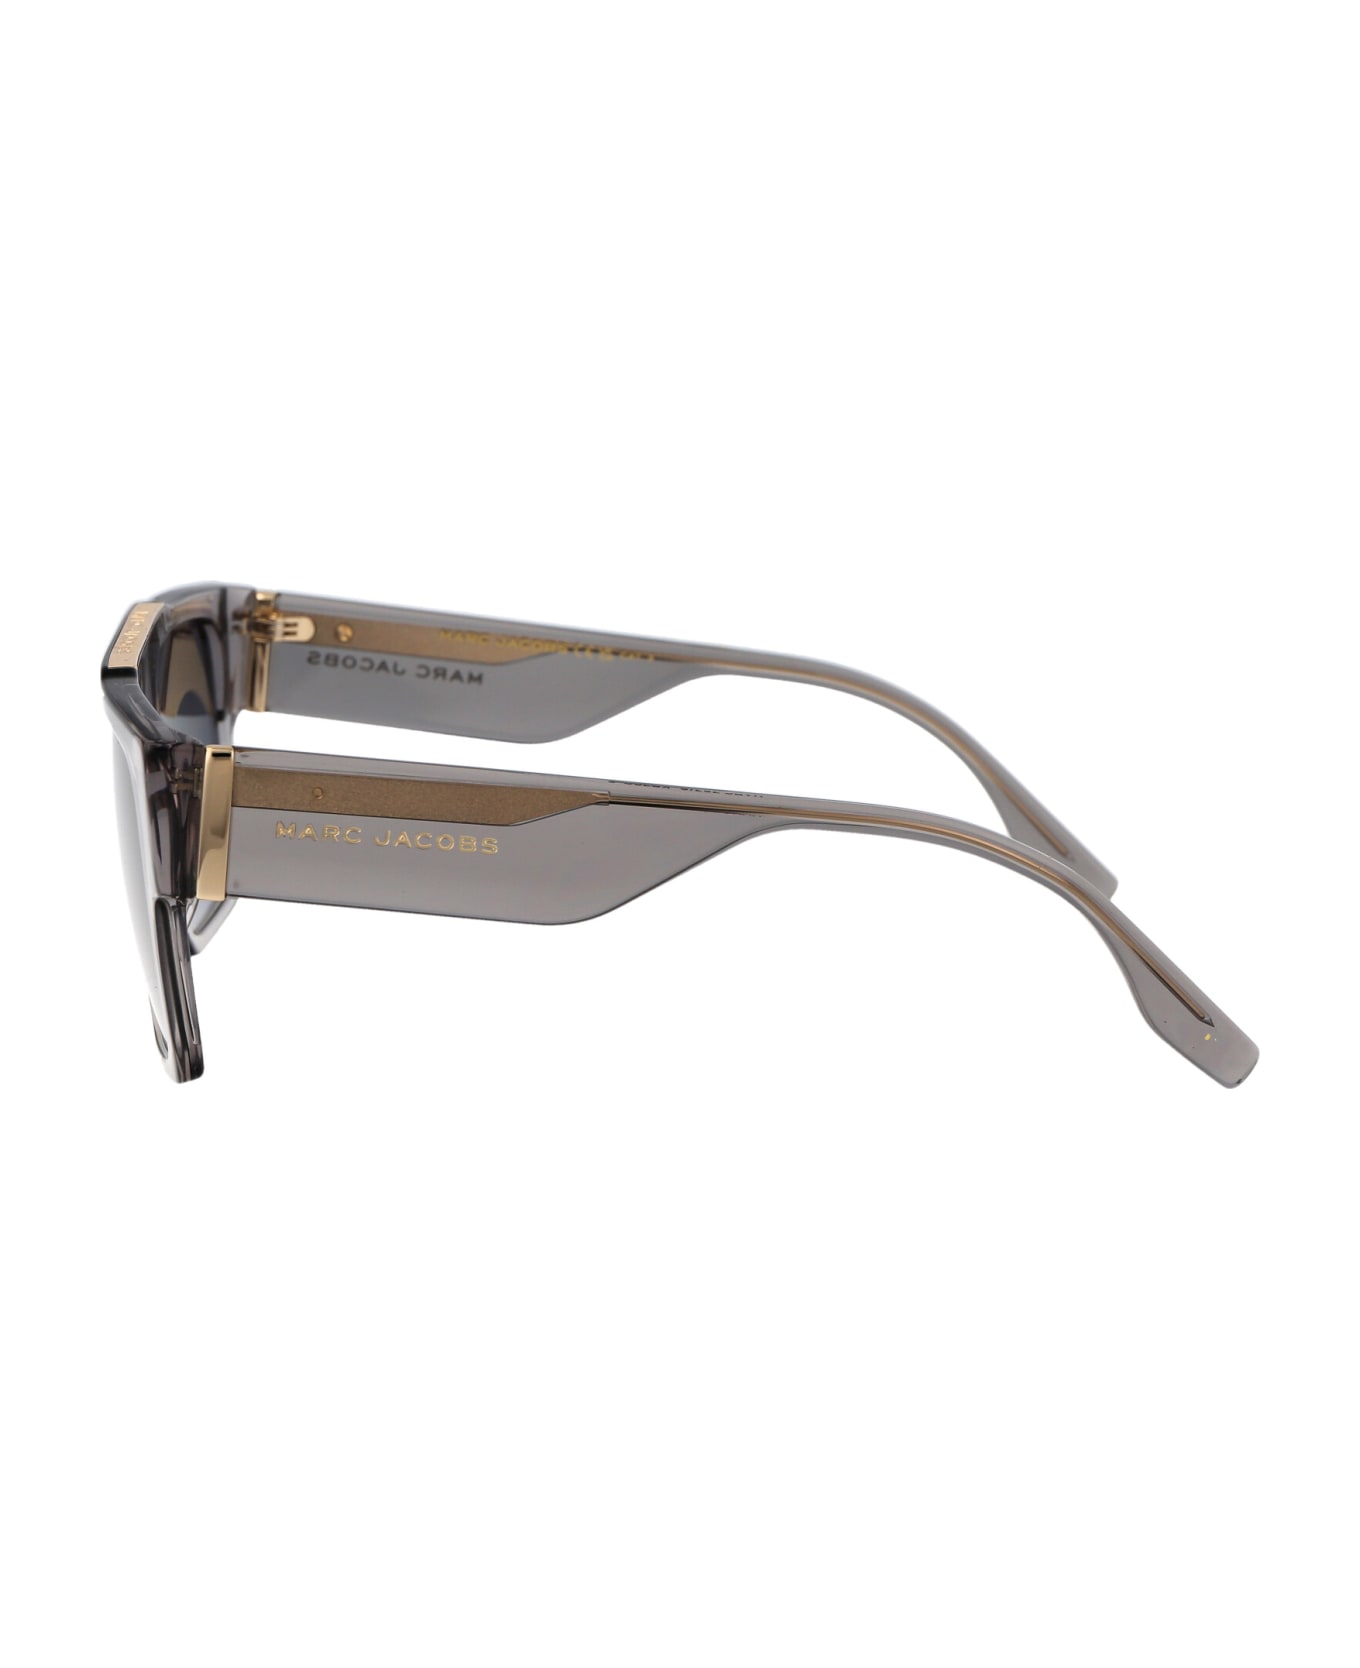 Marc Jacobs Eyewear Marc 757/s Sunglasses - KB79O GREY サングラス